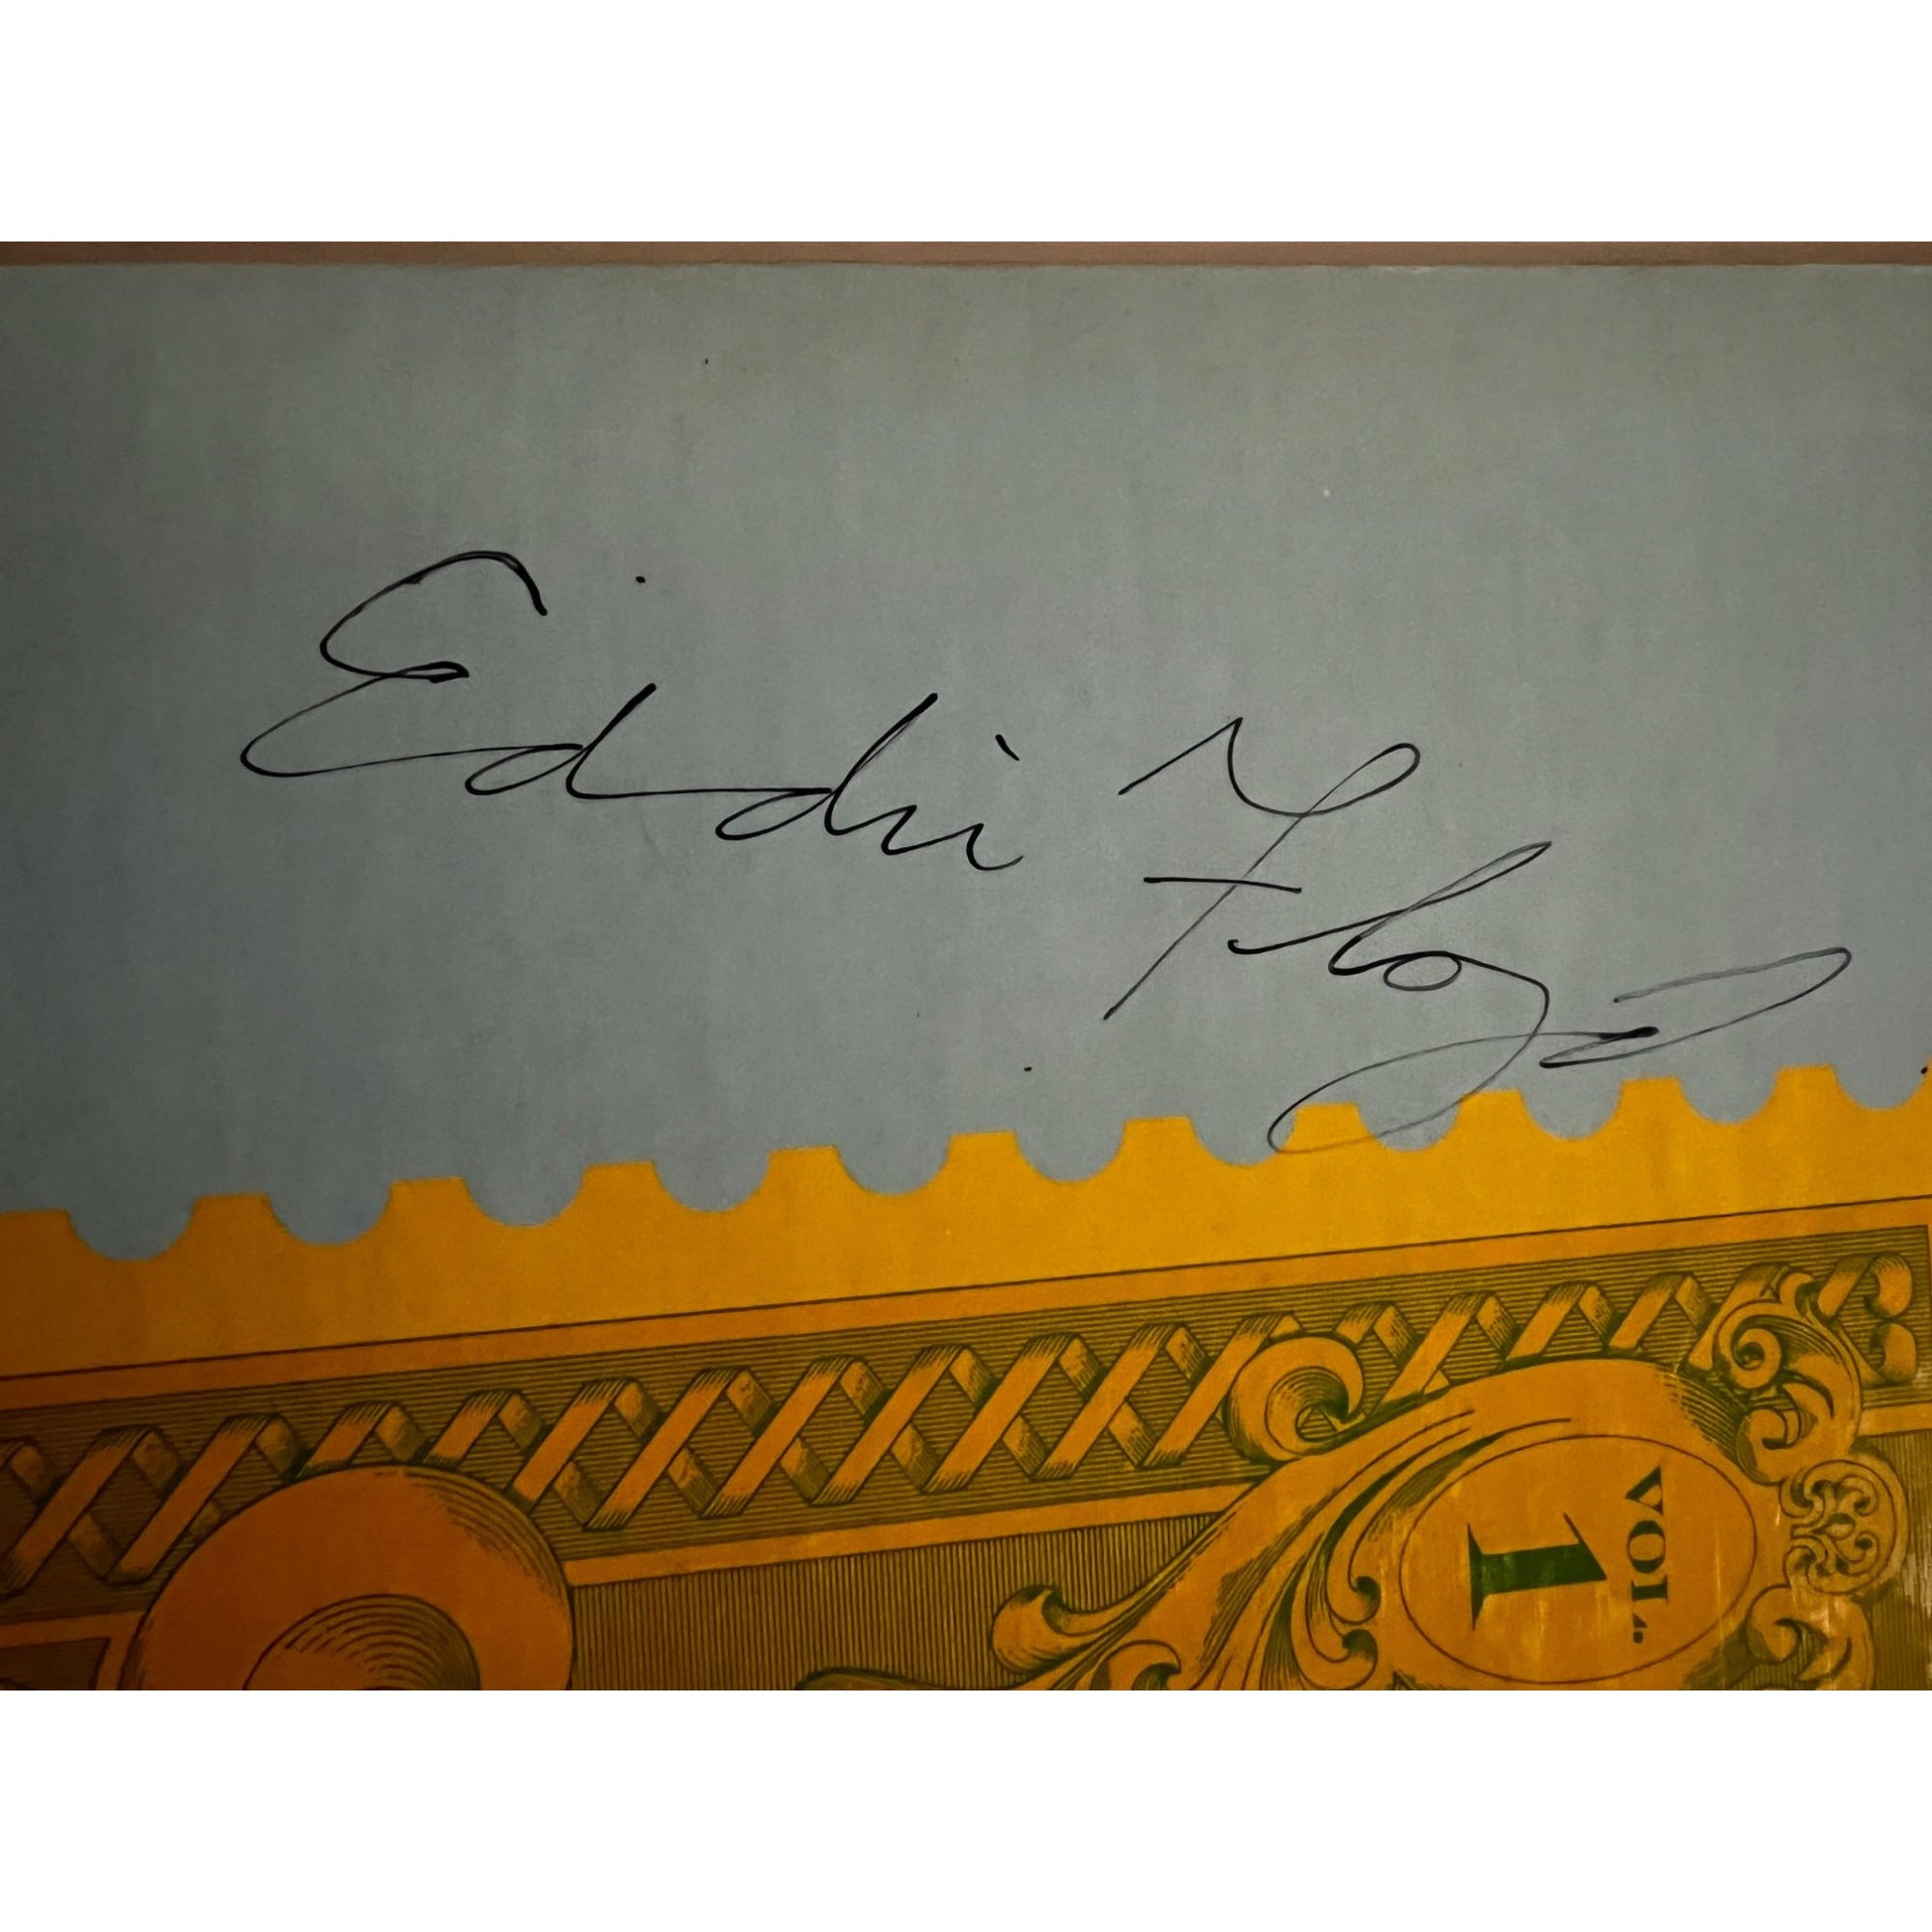 Eddie Floyd "Rare Stamps" LP signed